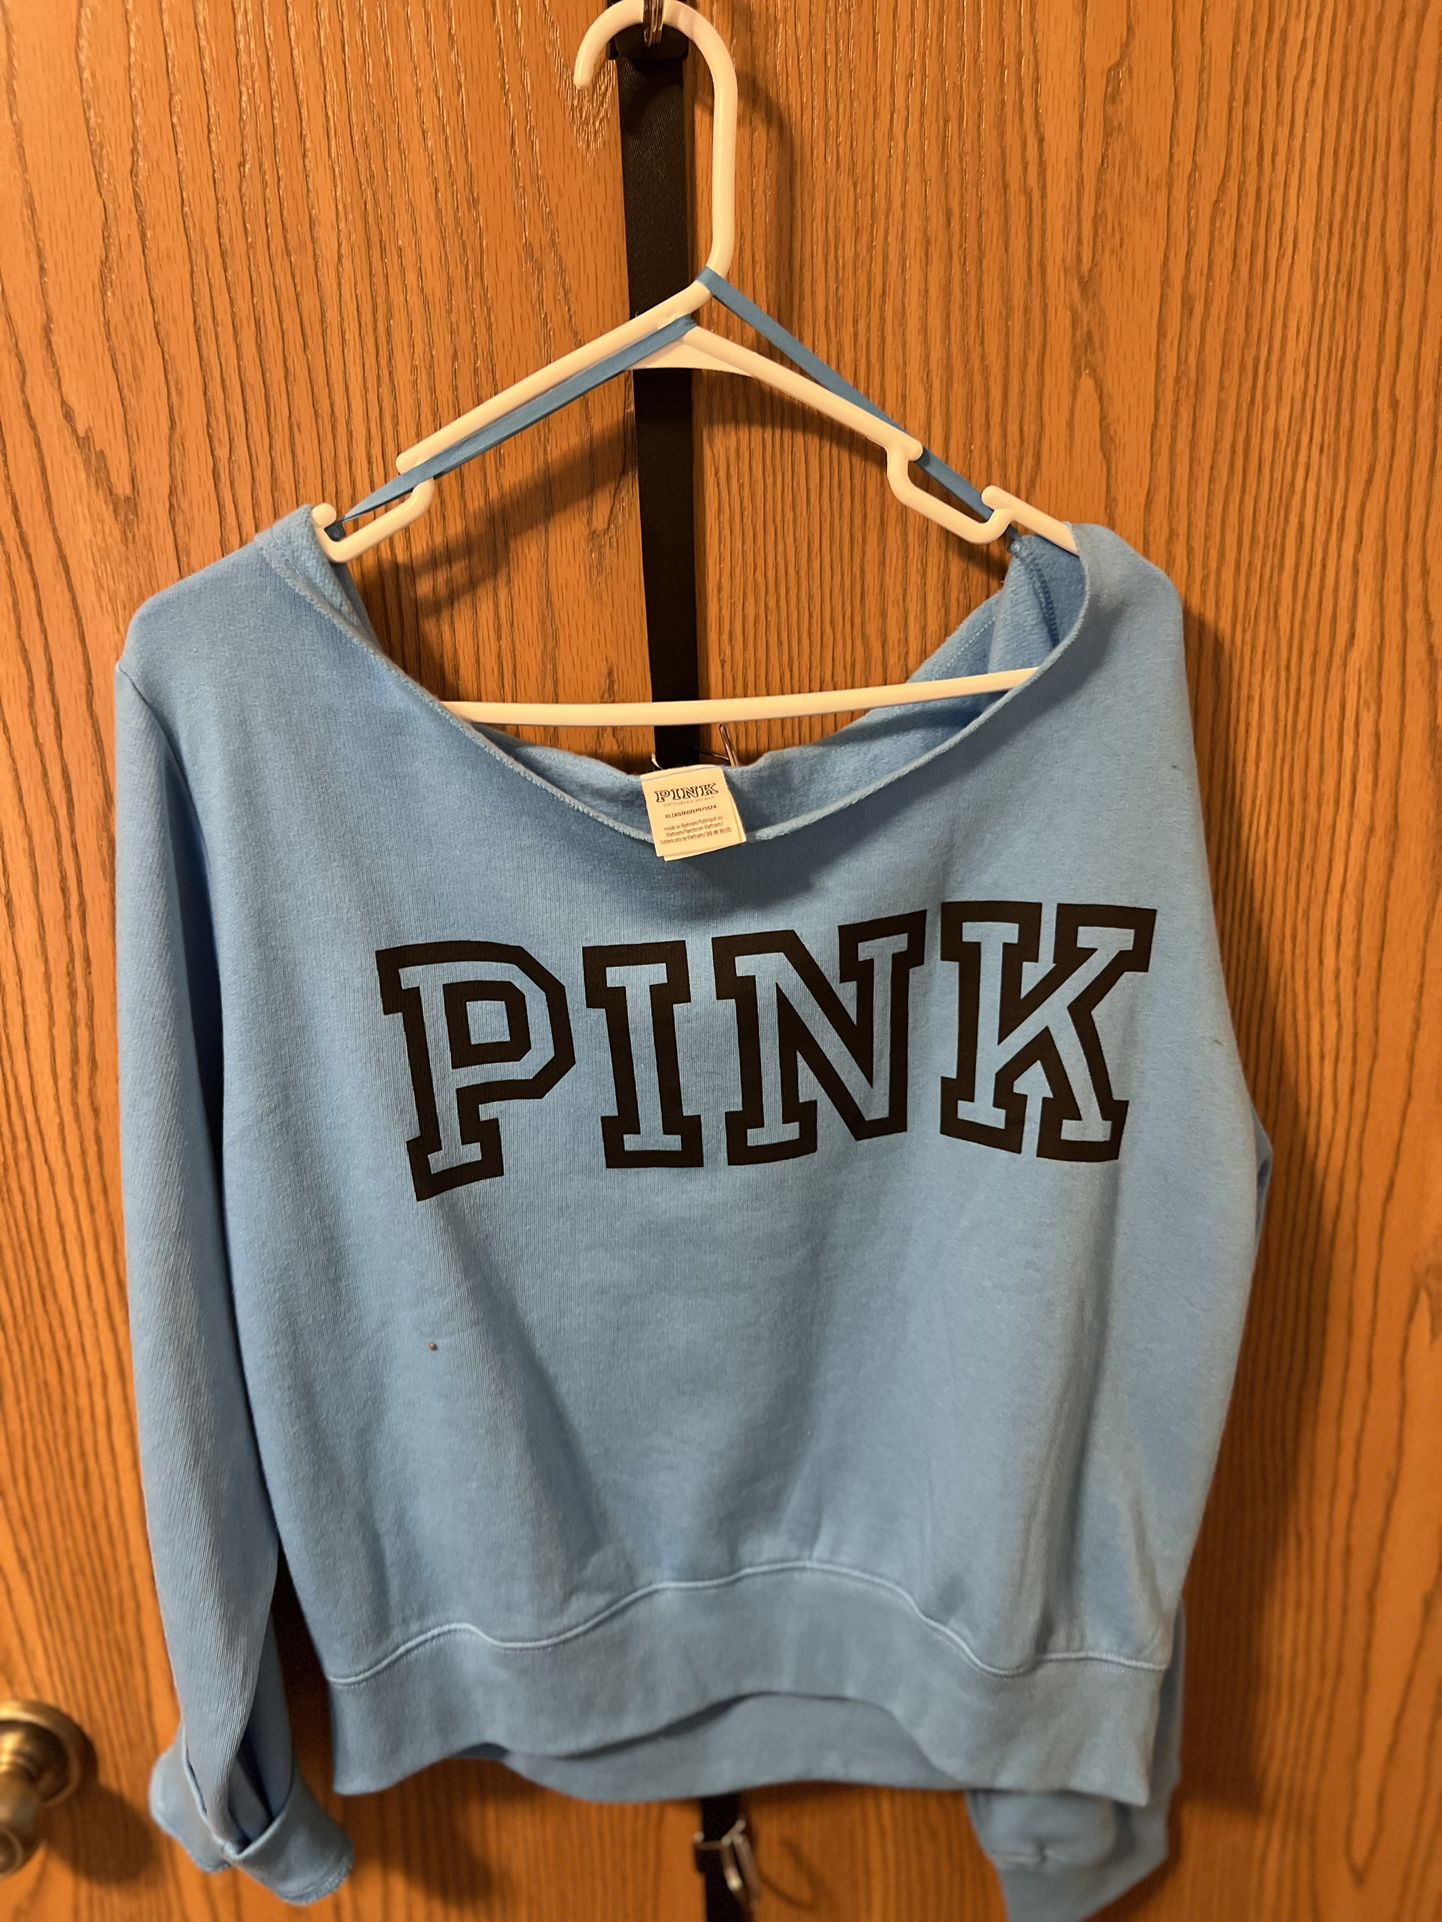 PINK Blue Sweatshirt 